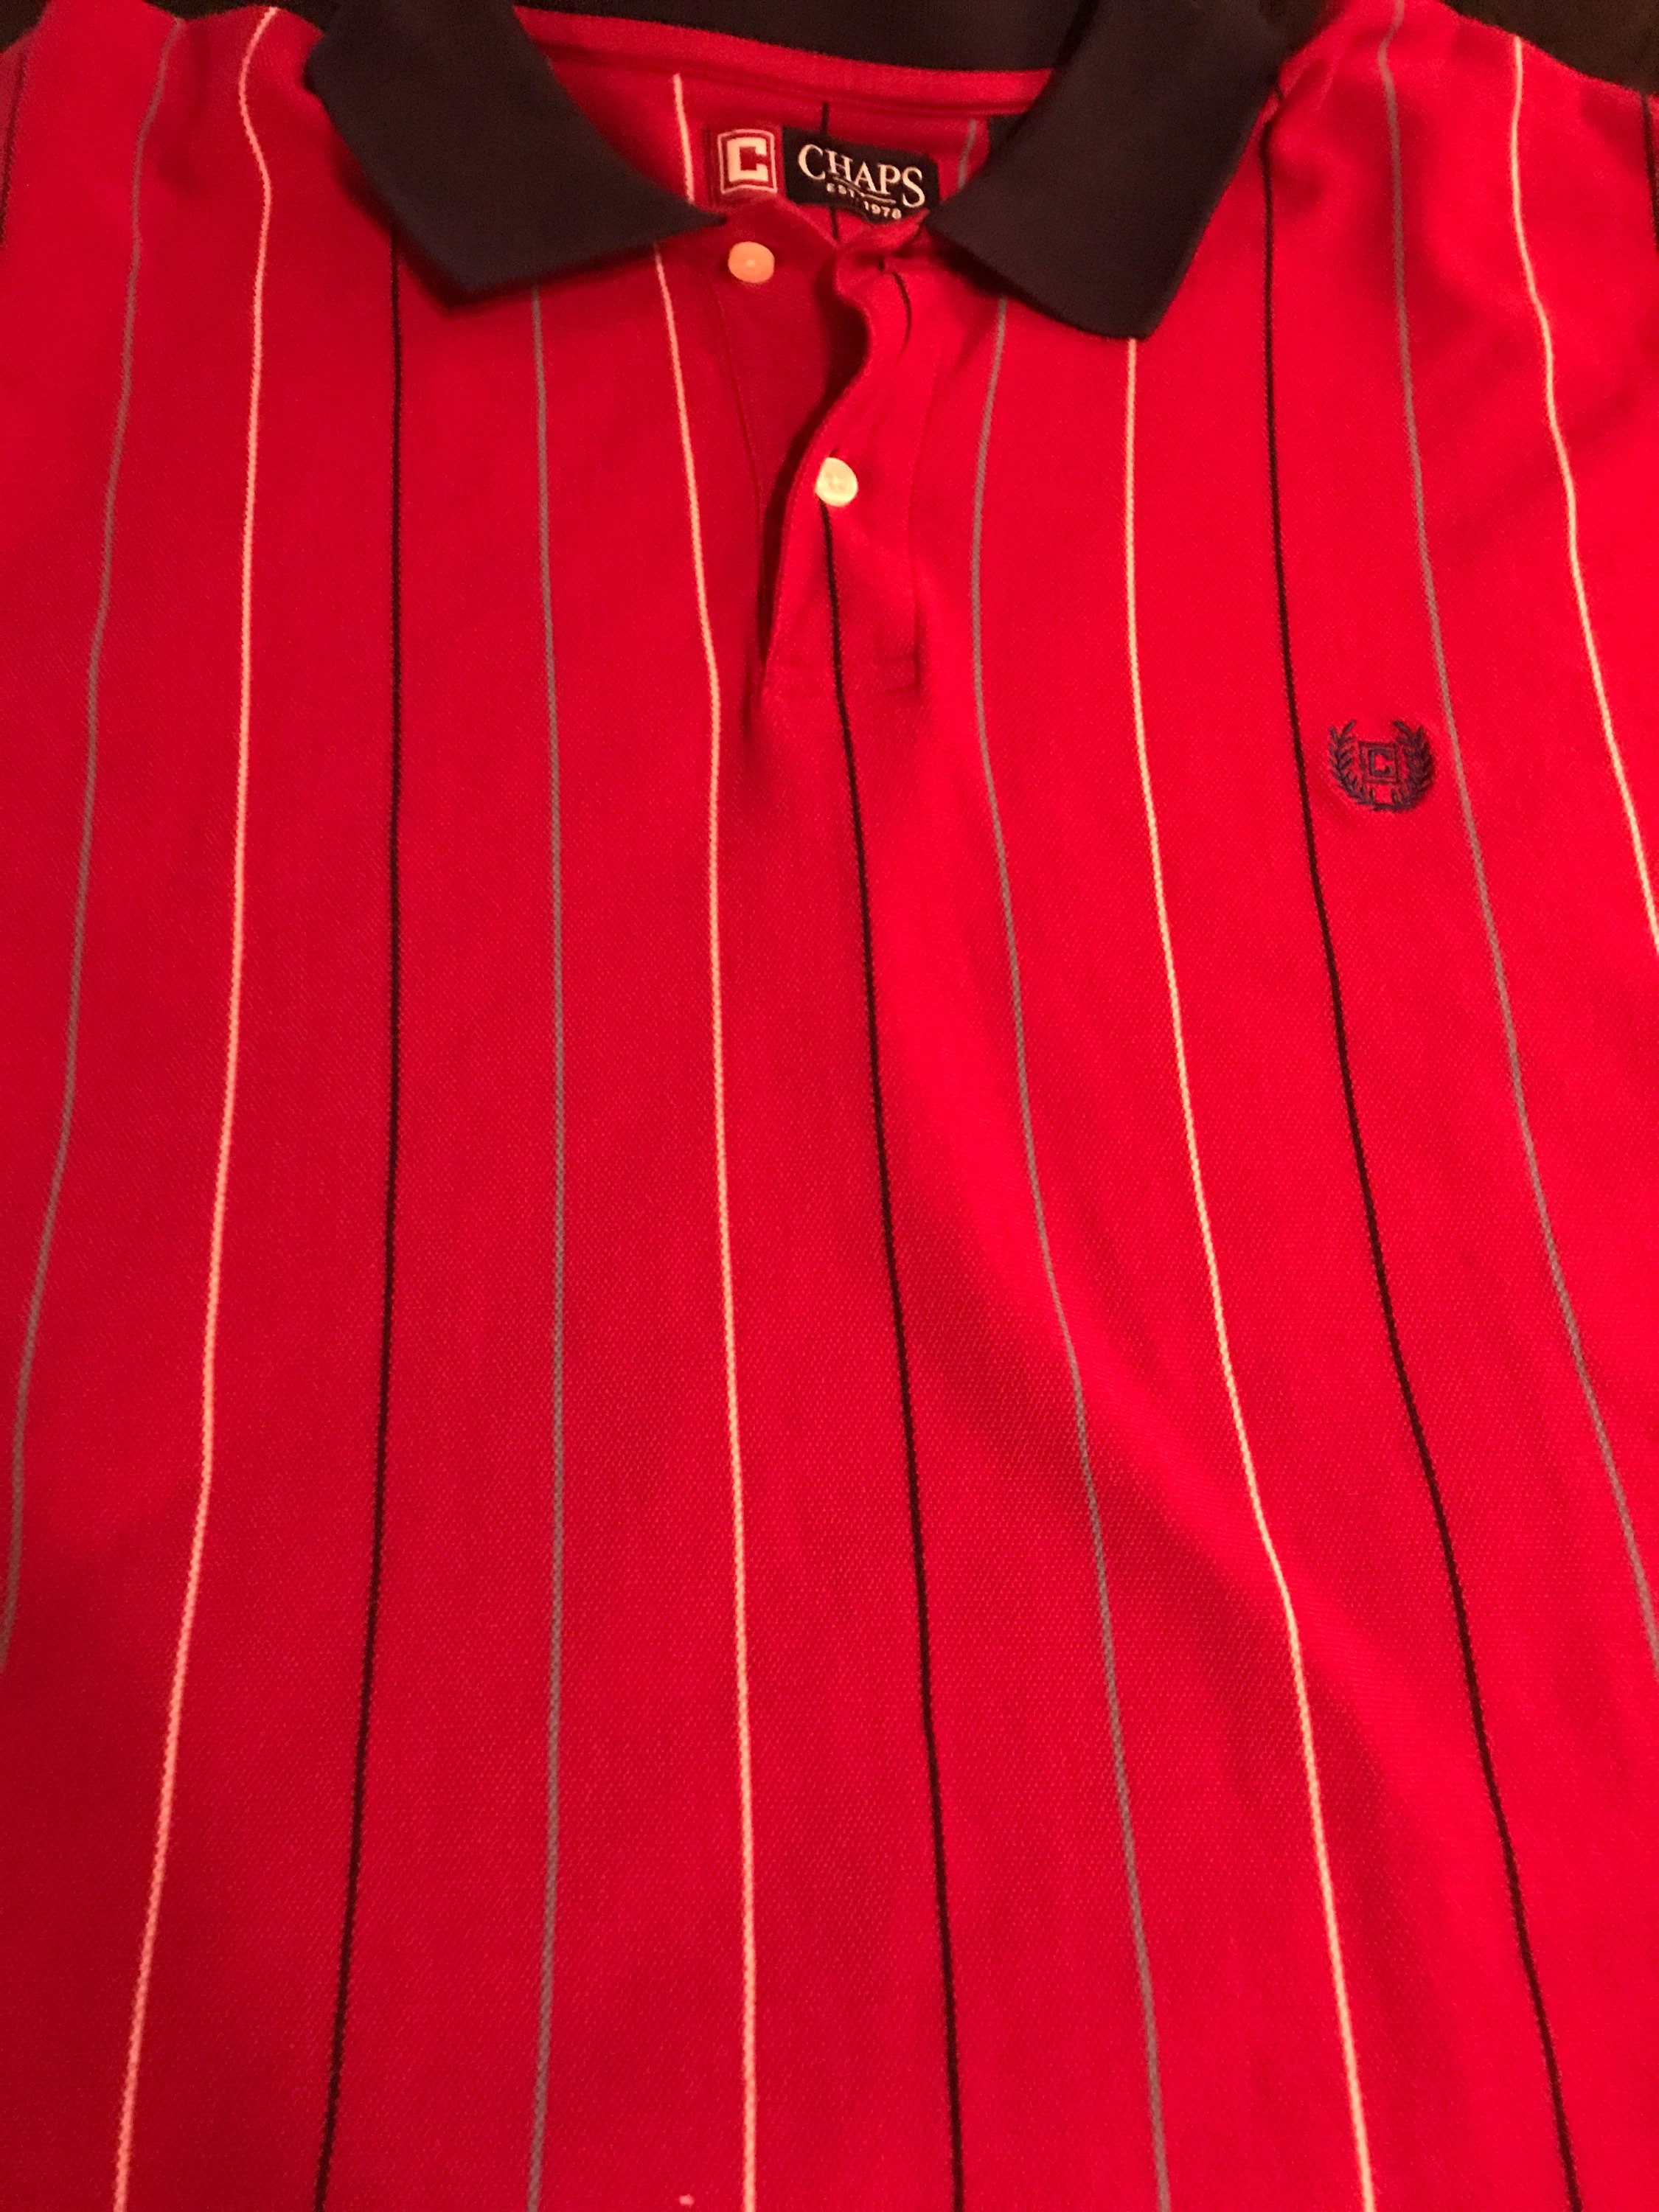 Vintage Chaps Polo Shirt. Red Striped Chaps Polo Shirt. Ralph Lauren ...